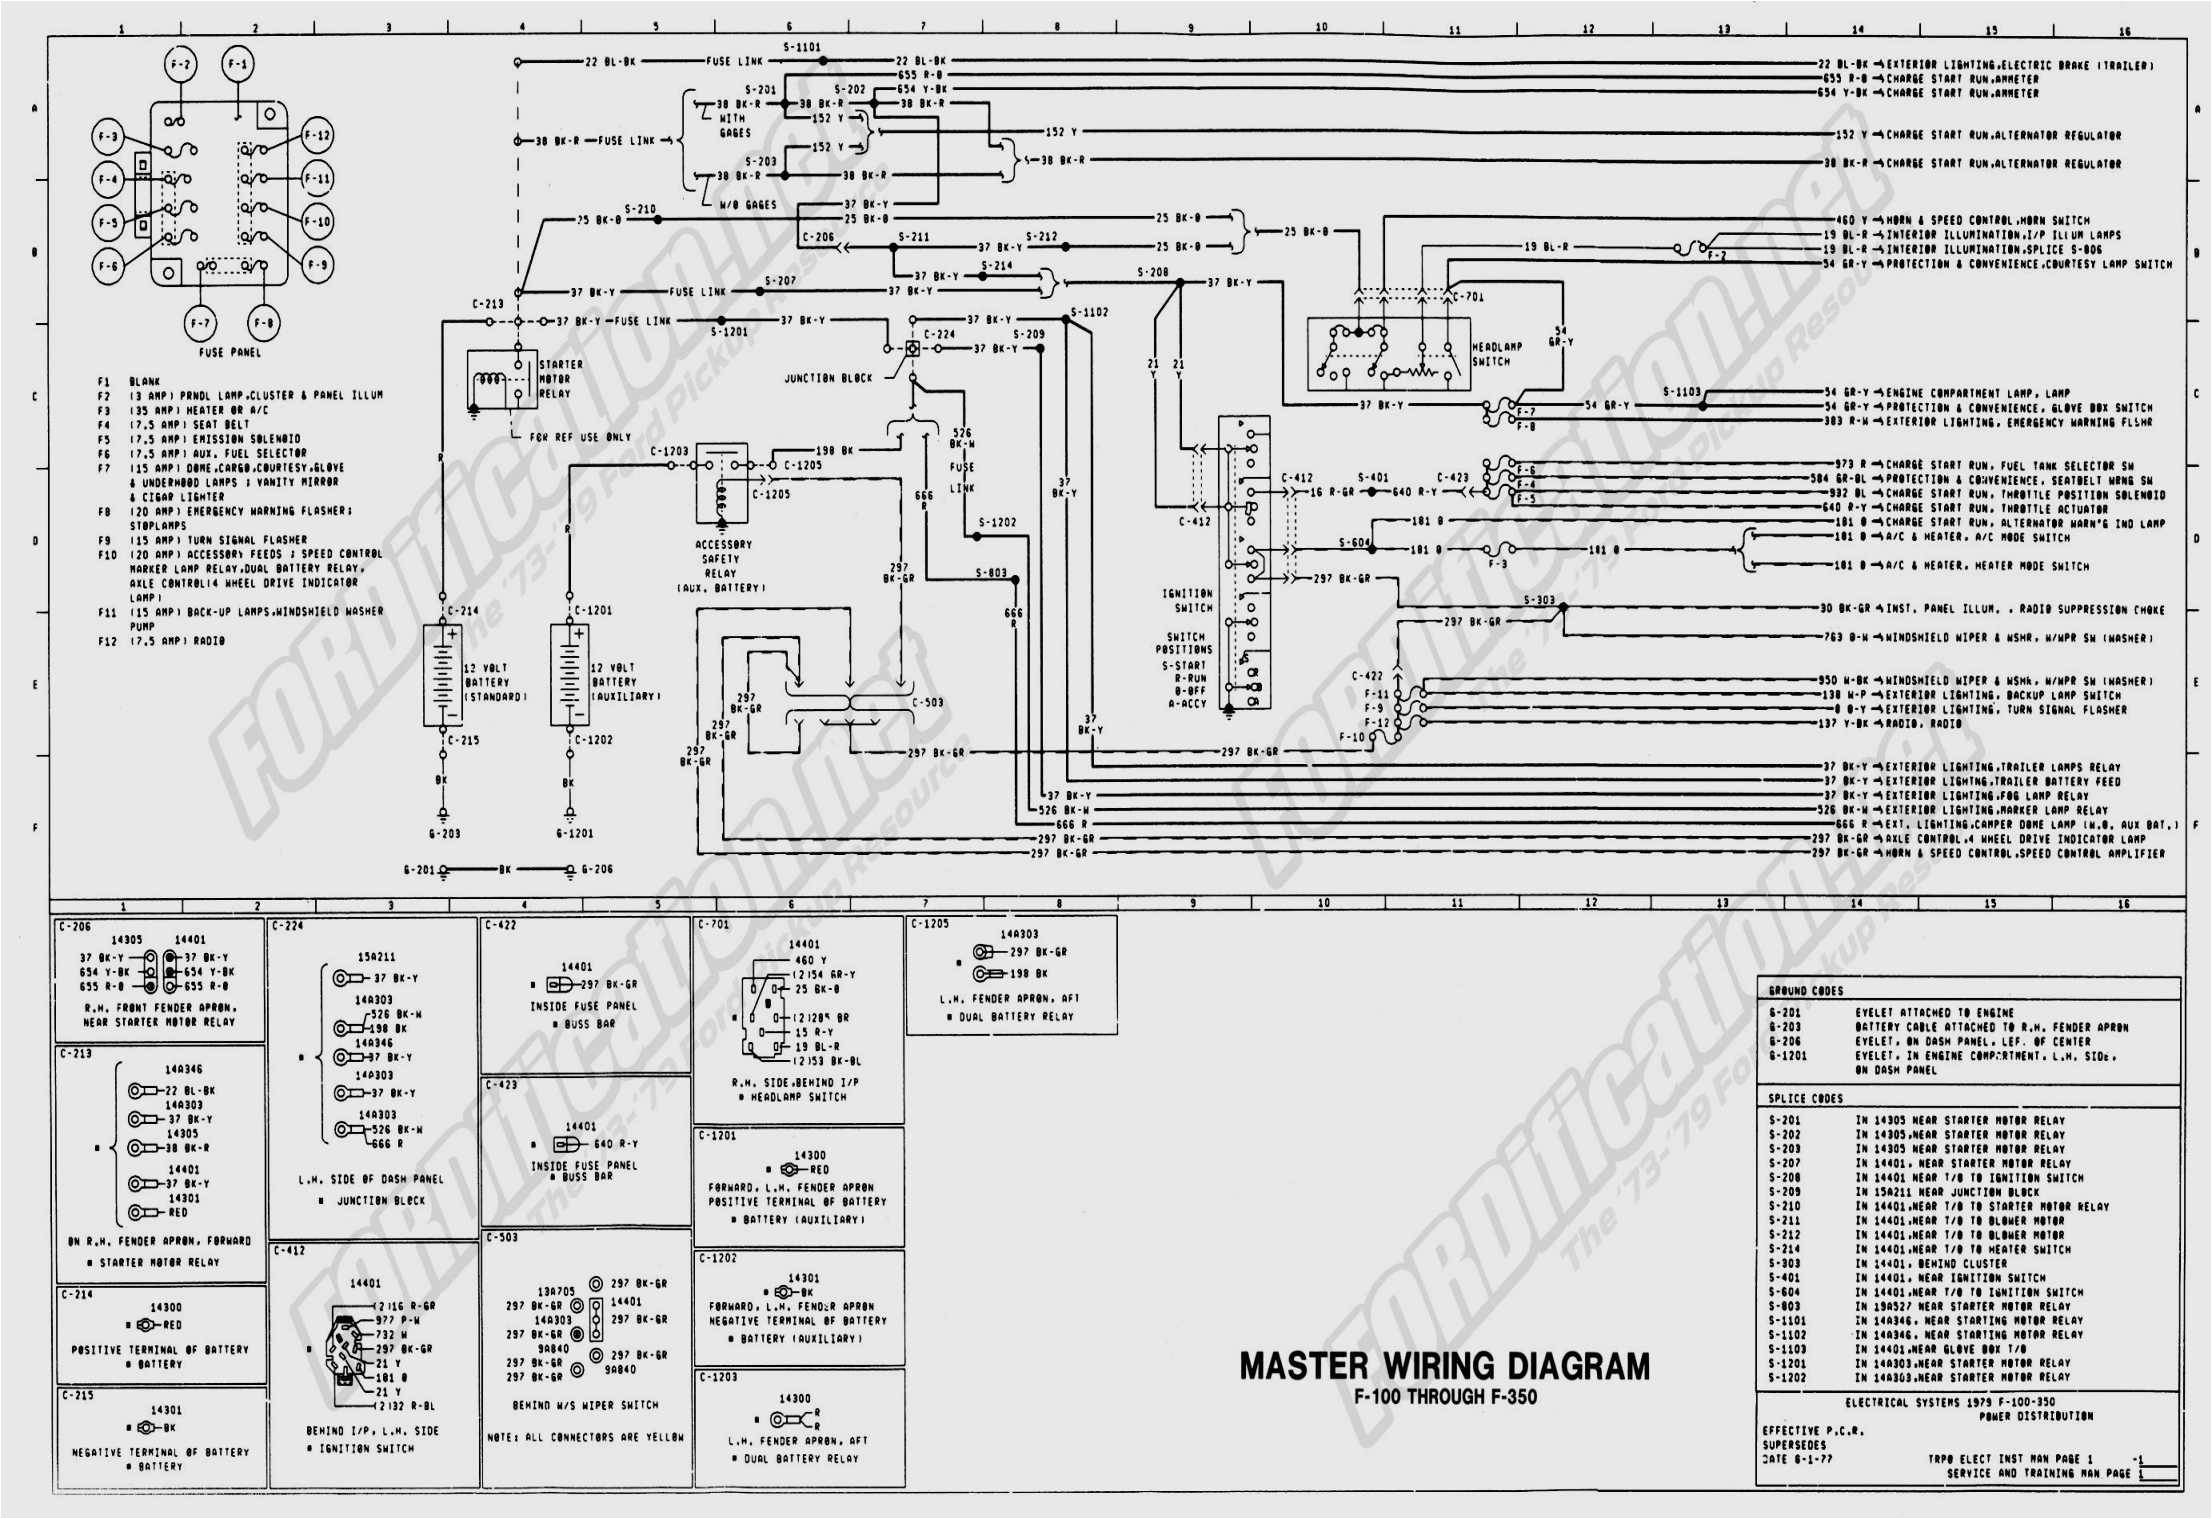 1978 corvette wiring diagram pdf vw beetle wiring diagram as well as 1972 volkswagen beetle wiring